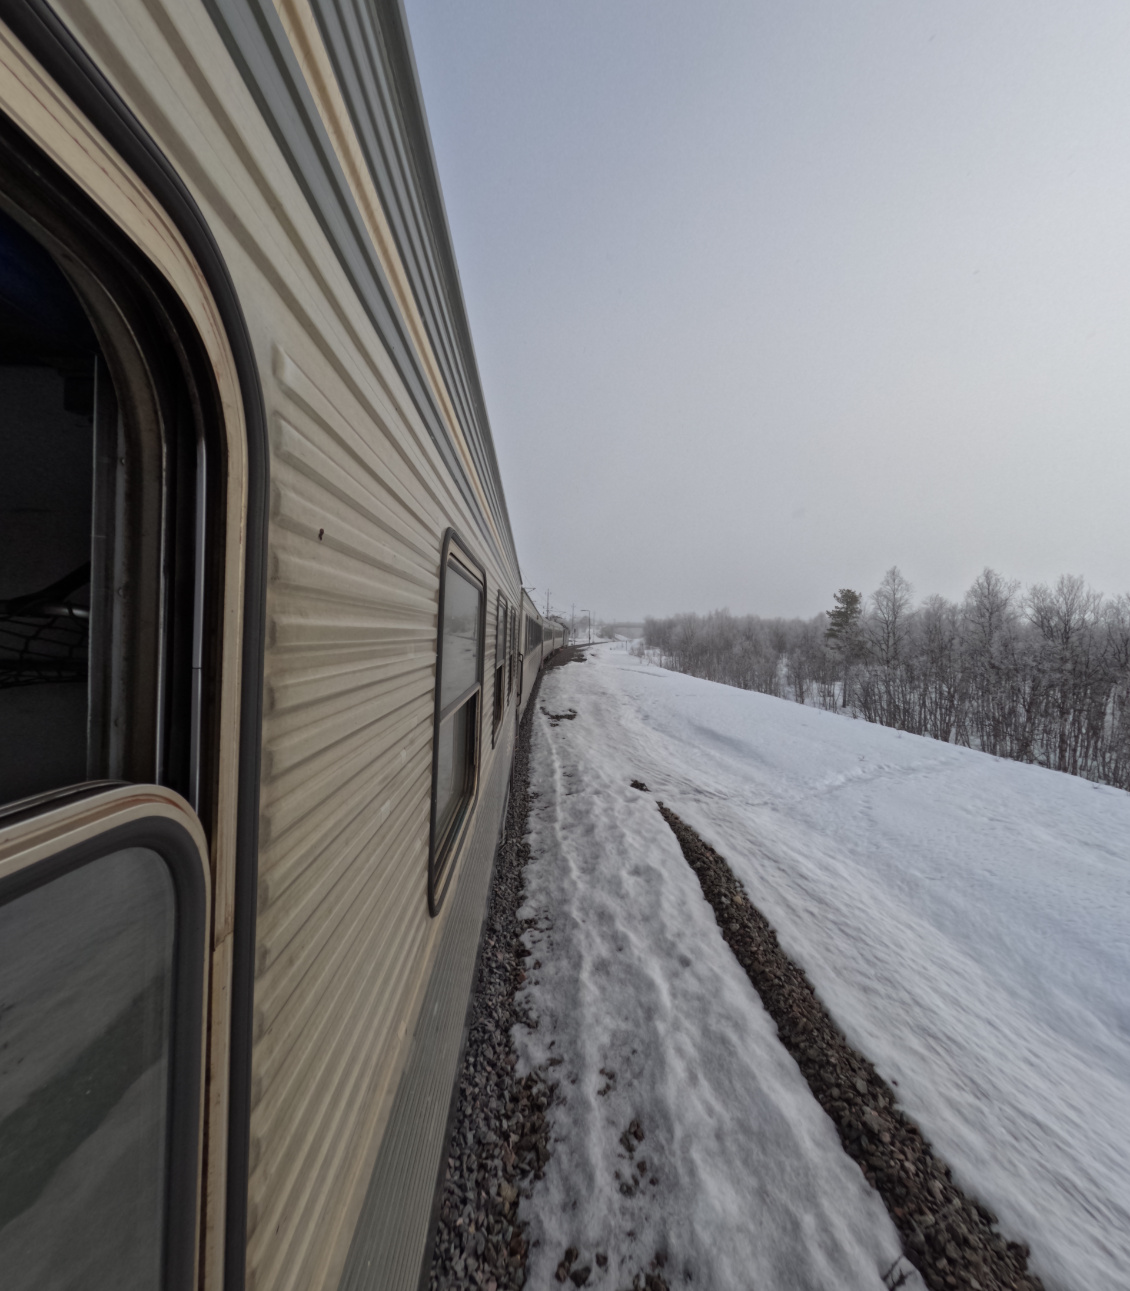 Vers le Grand Nord en train !
Photo : Jules Buthion